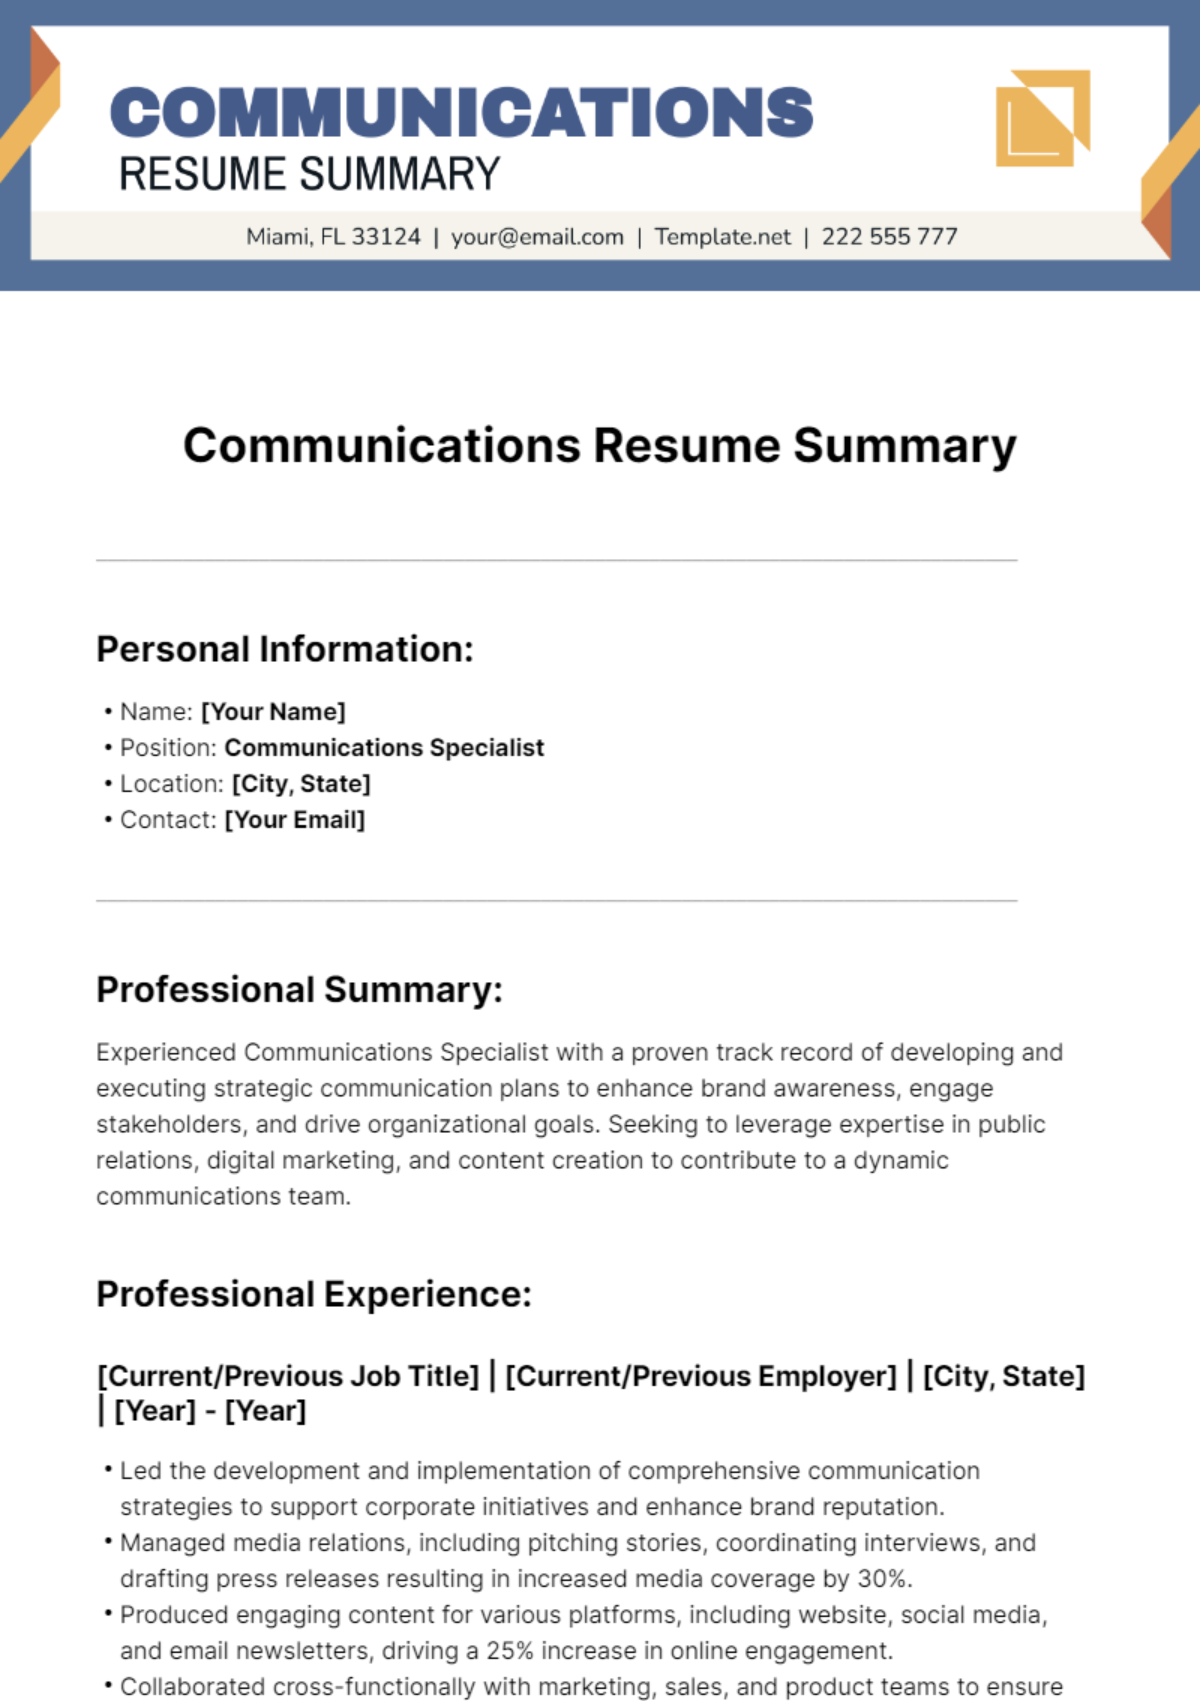 Free Communications Resume Summary Template